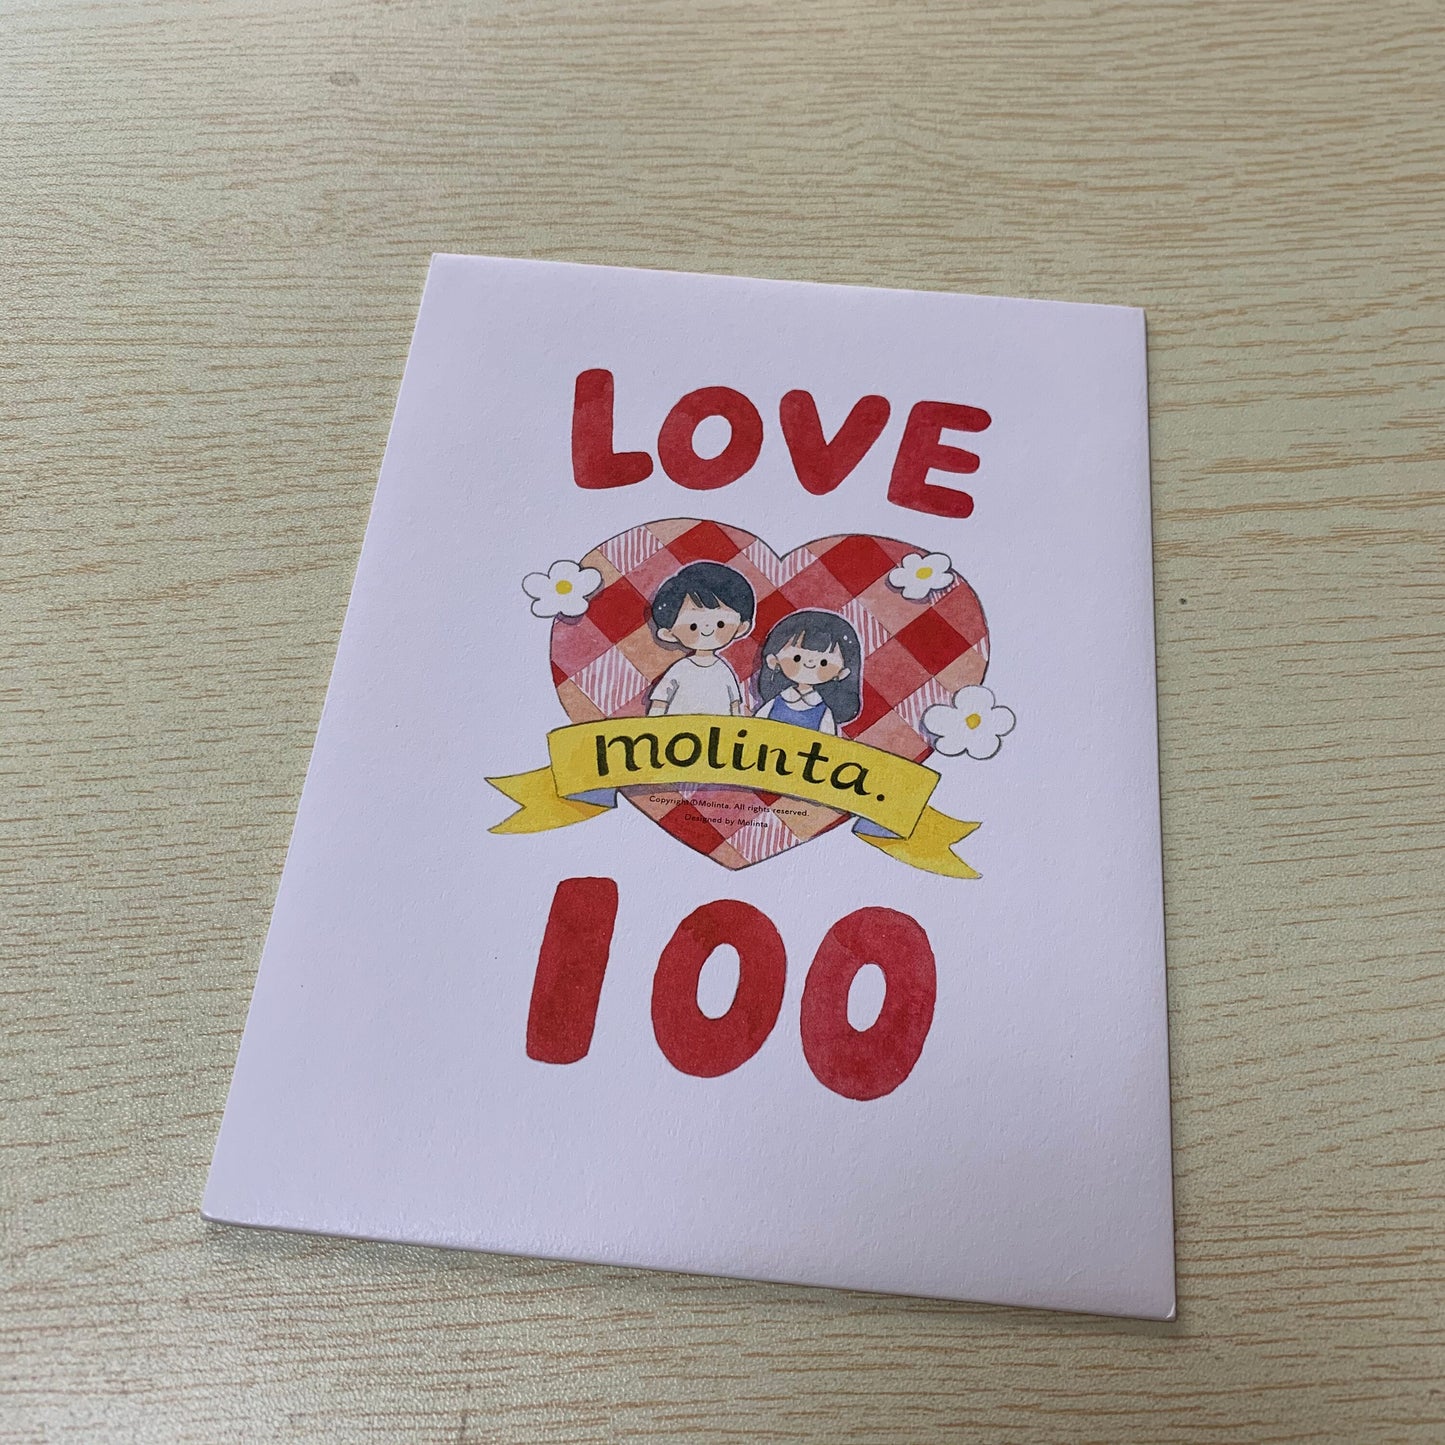 Molinta love 100 sticker